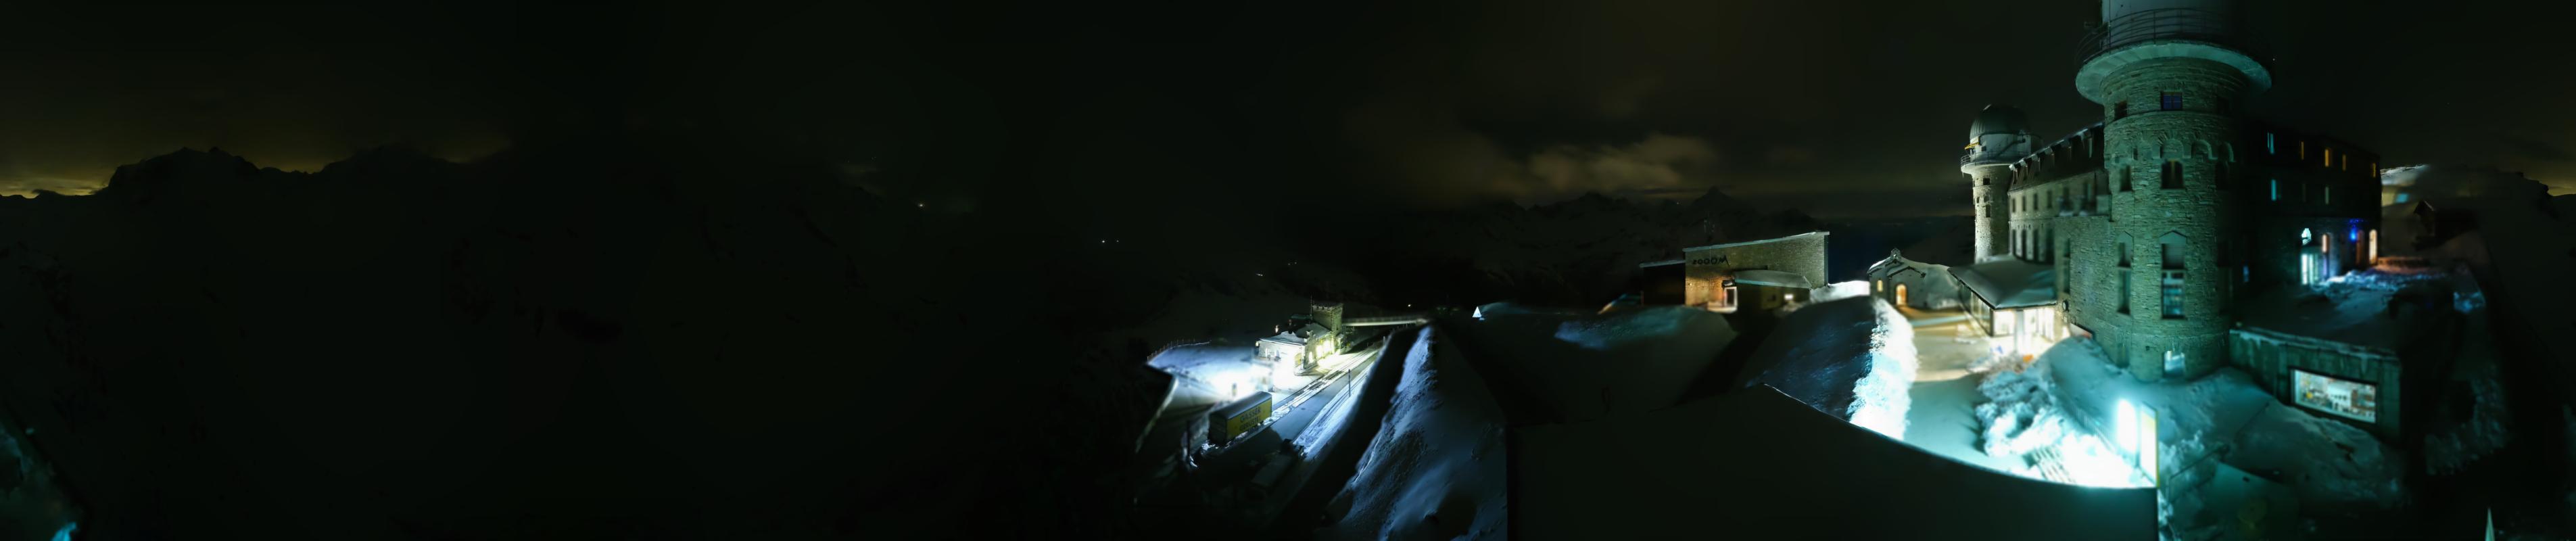 Zermatt Gornergrat